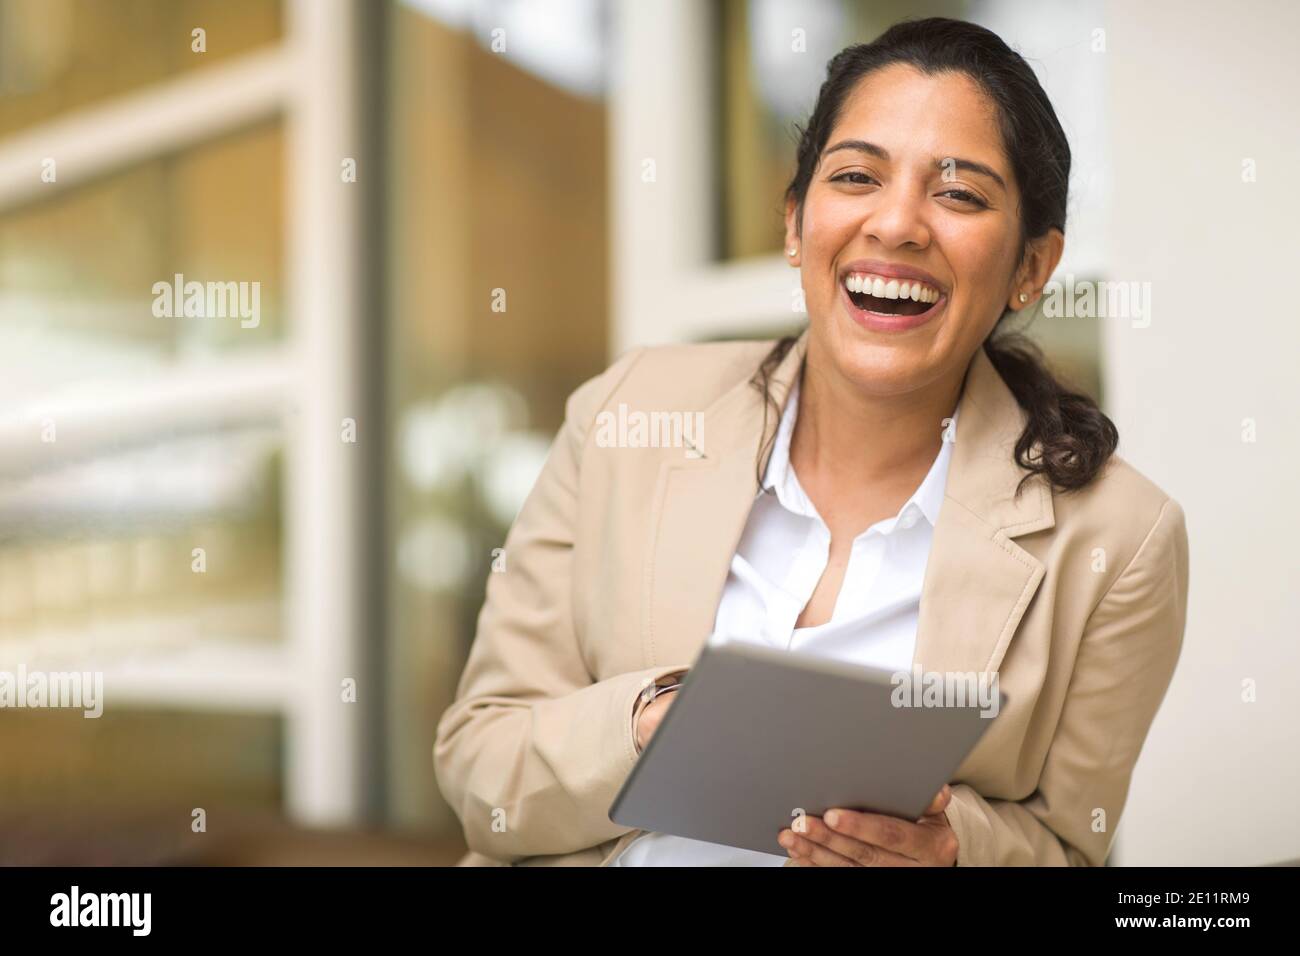 Hispanic business woman smiling outside stock photo Stock Photo